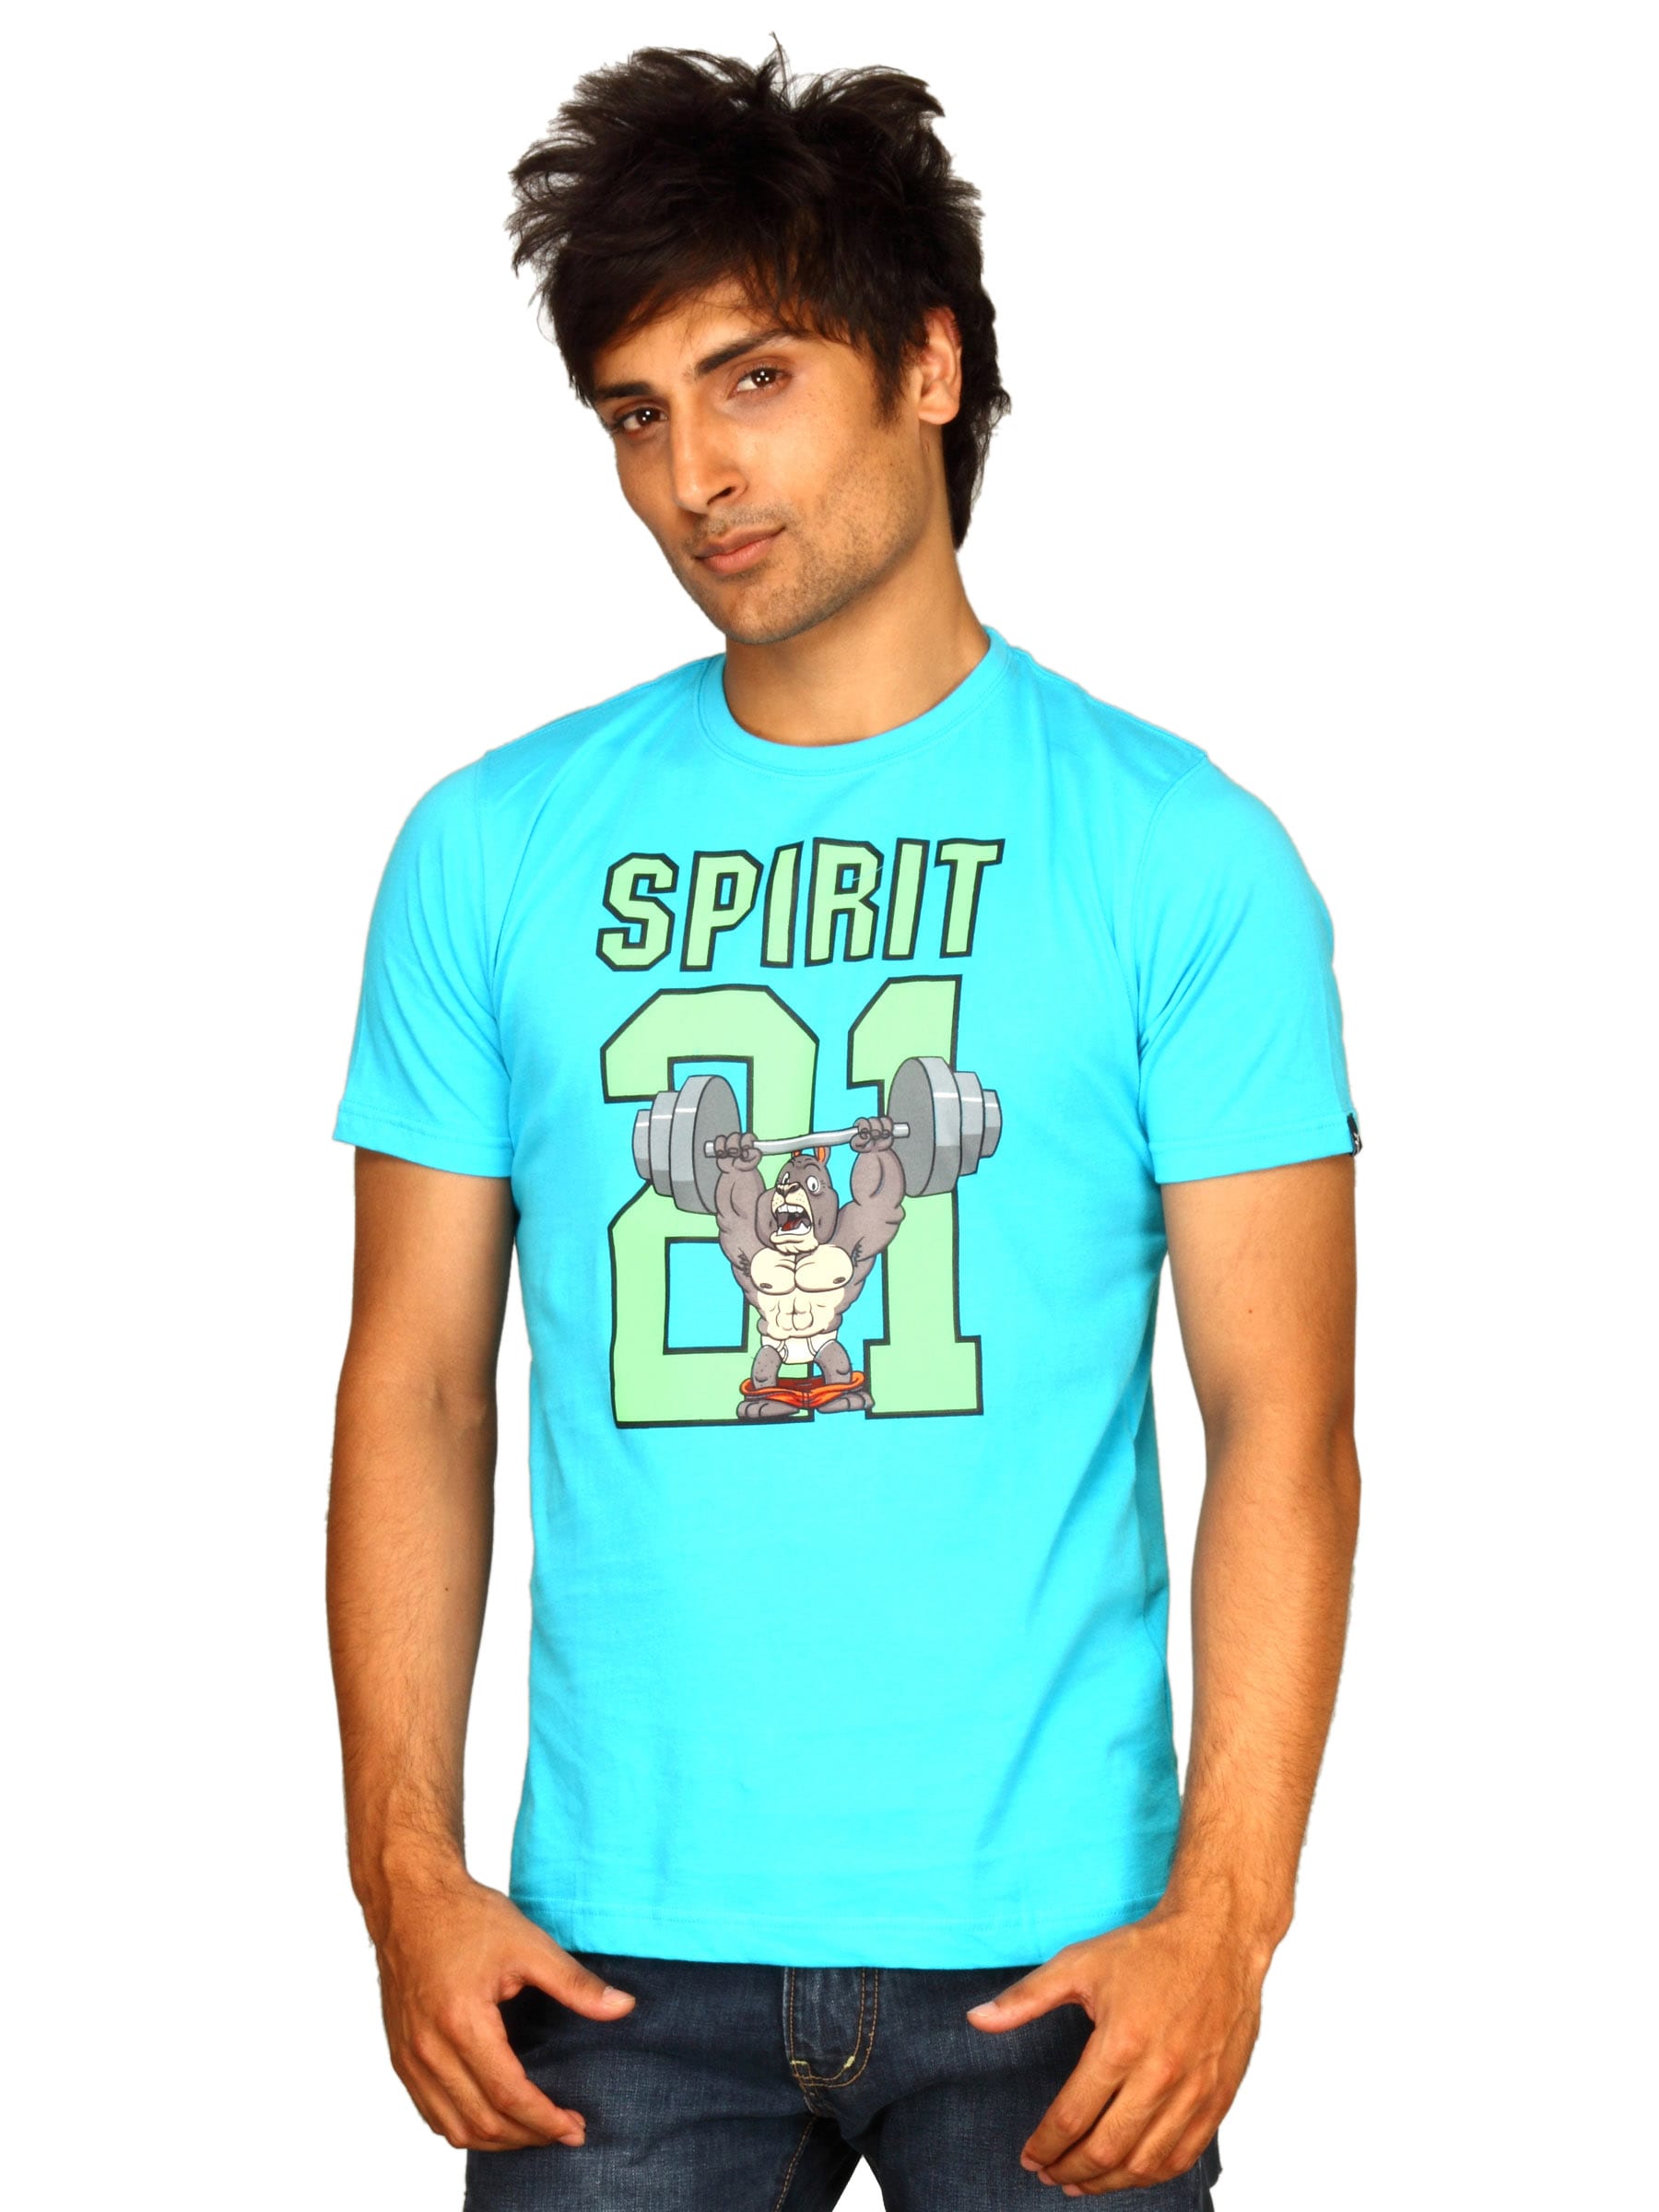 Probase Men's Spirit Blue T-shirt